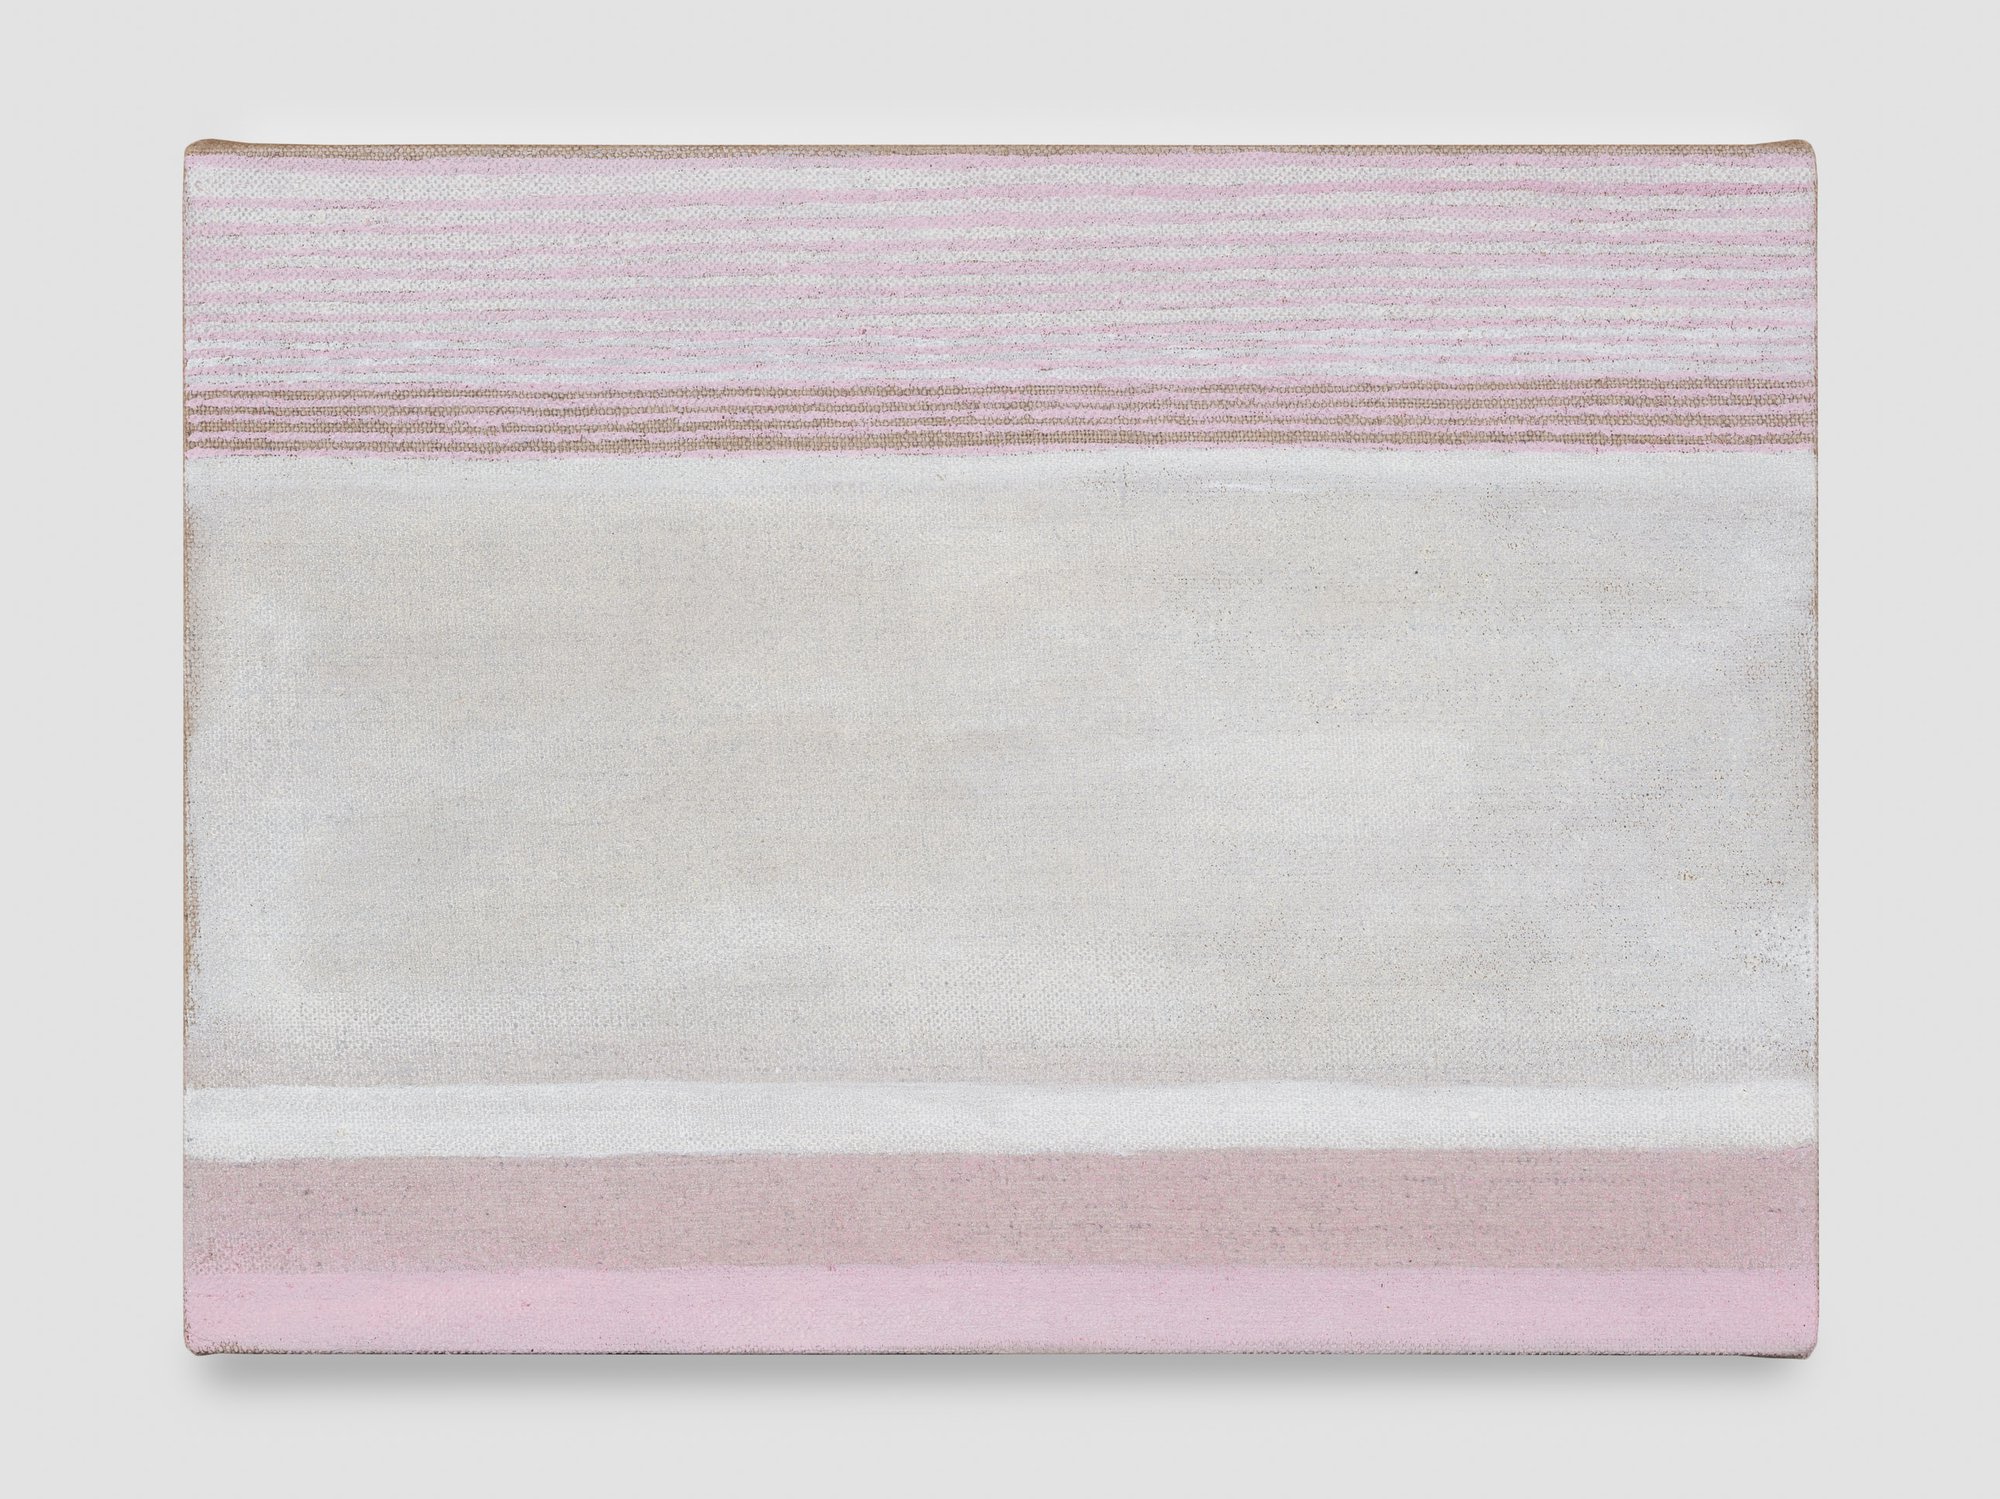 Leidy Churchman, Between is Ringing (Bodhichitta Baby), oil on linen, 18 x 24.4 cm (7 1/8 x 9 5/8 in), 2020